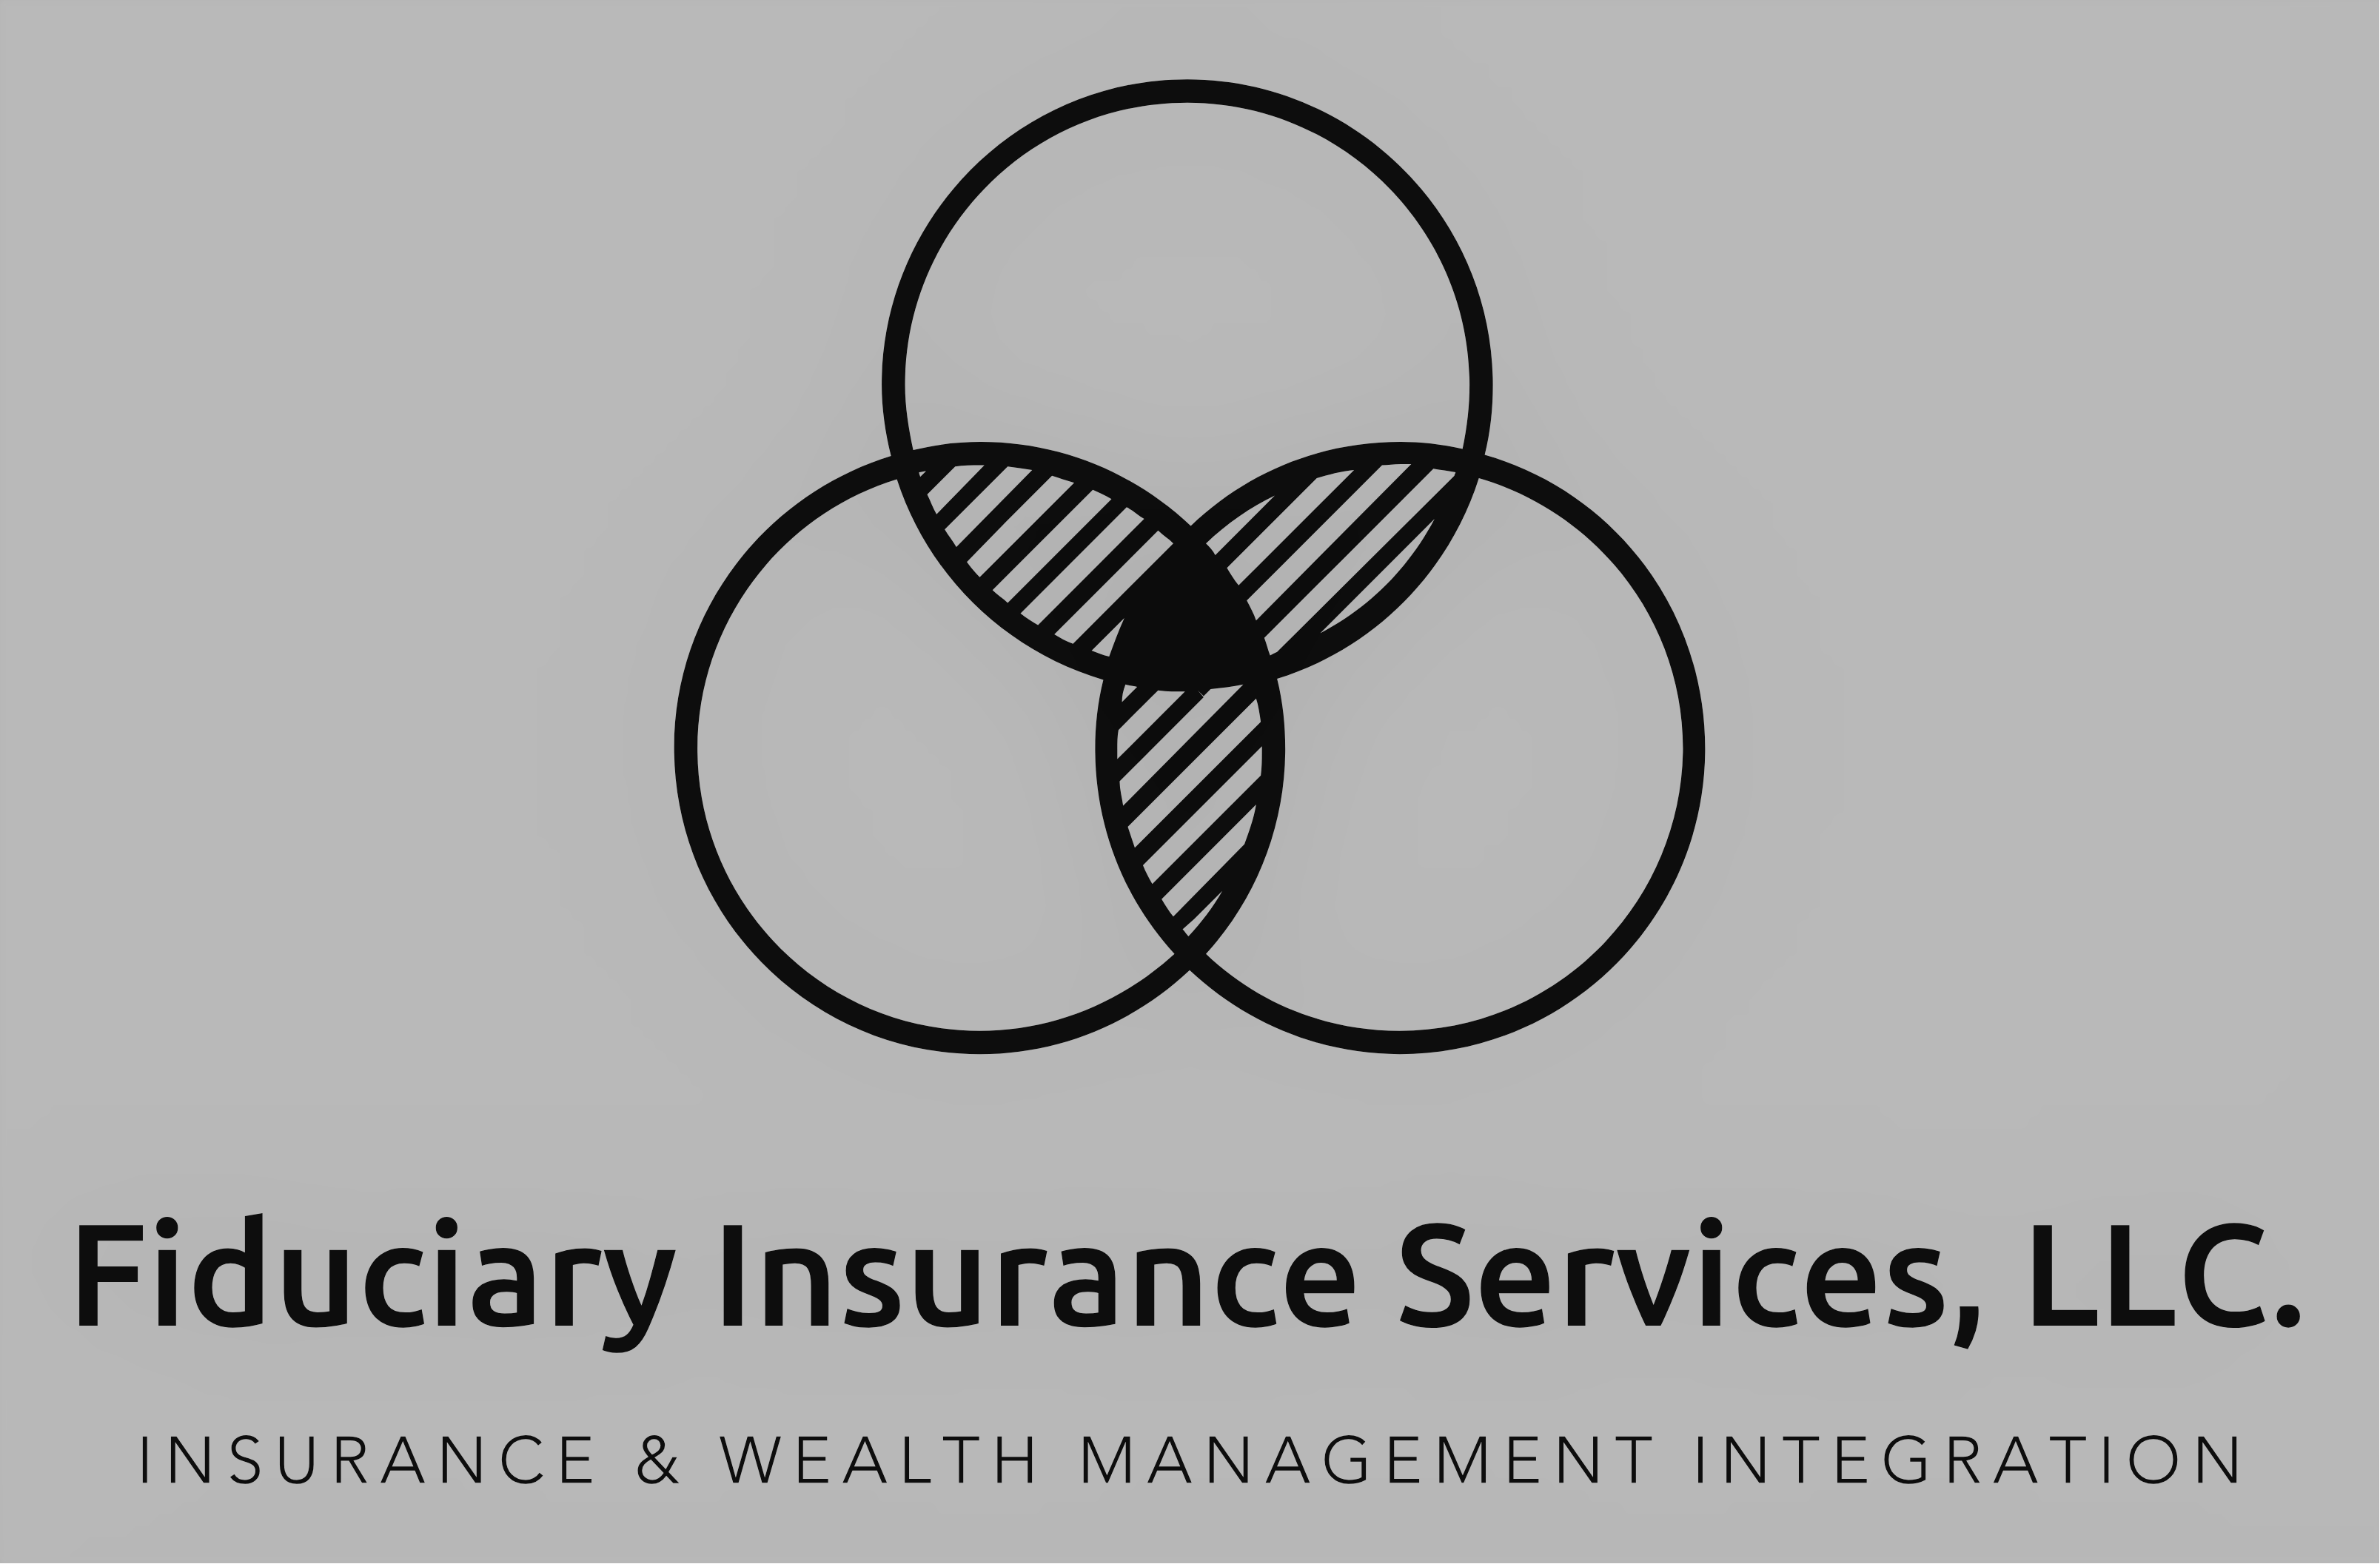 Fiduciary Insurance Services logo